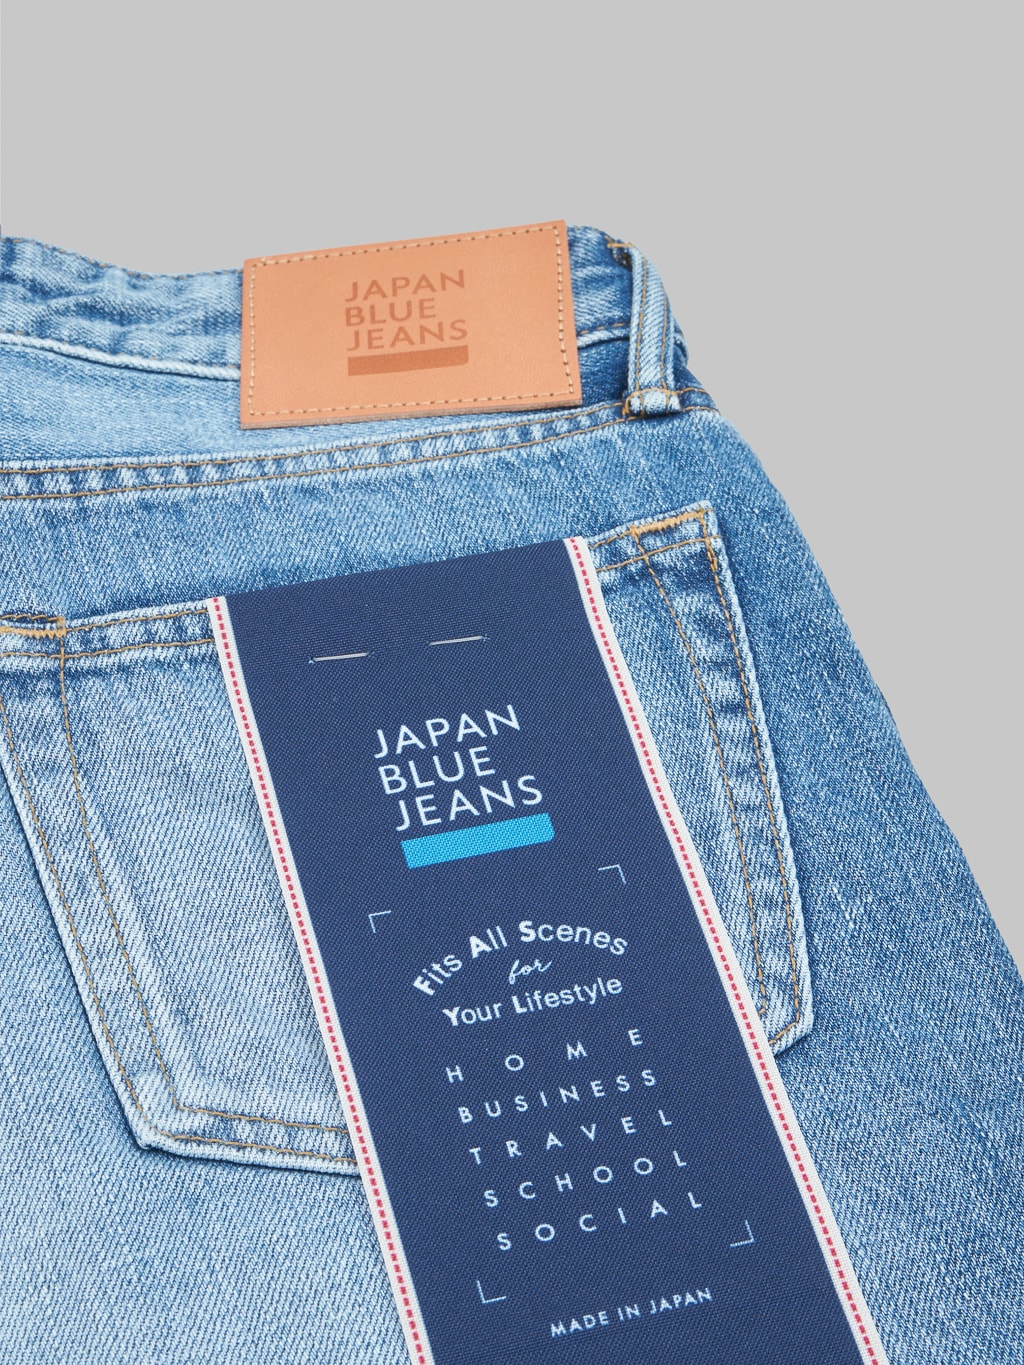 Japan Blue J304 Africa cotton Stonewashed Straight Jeans pocket flasher